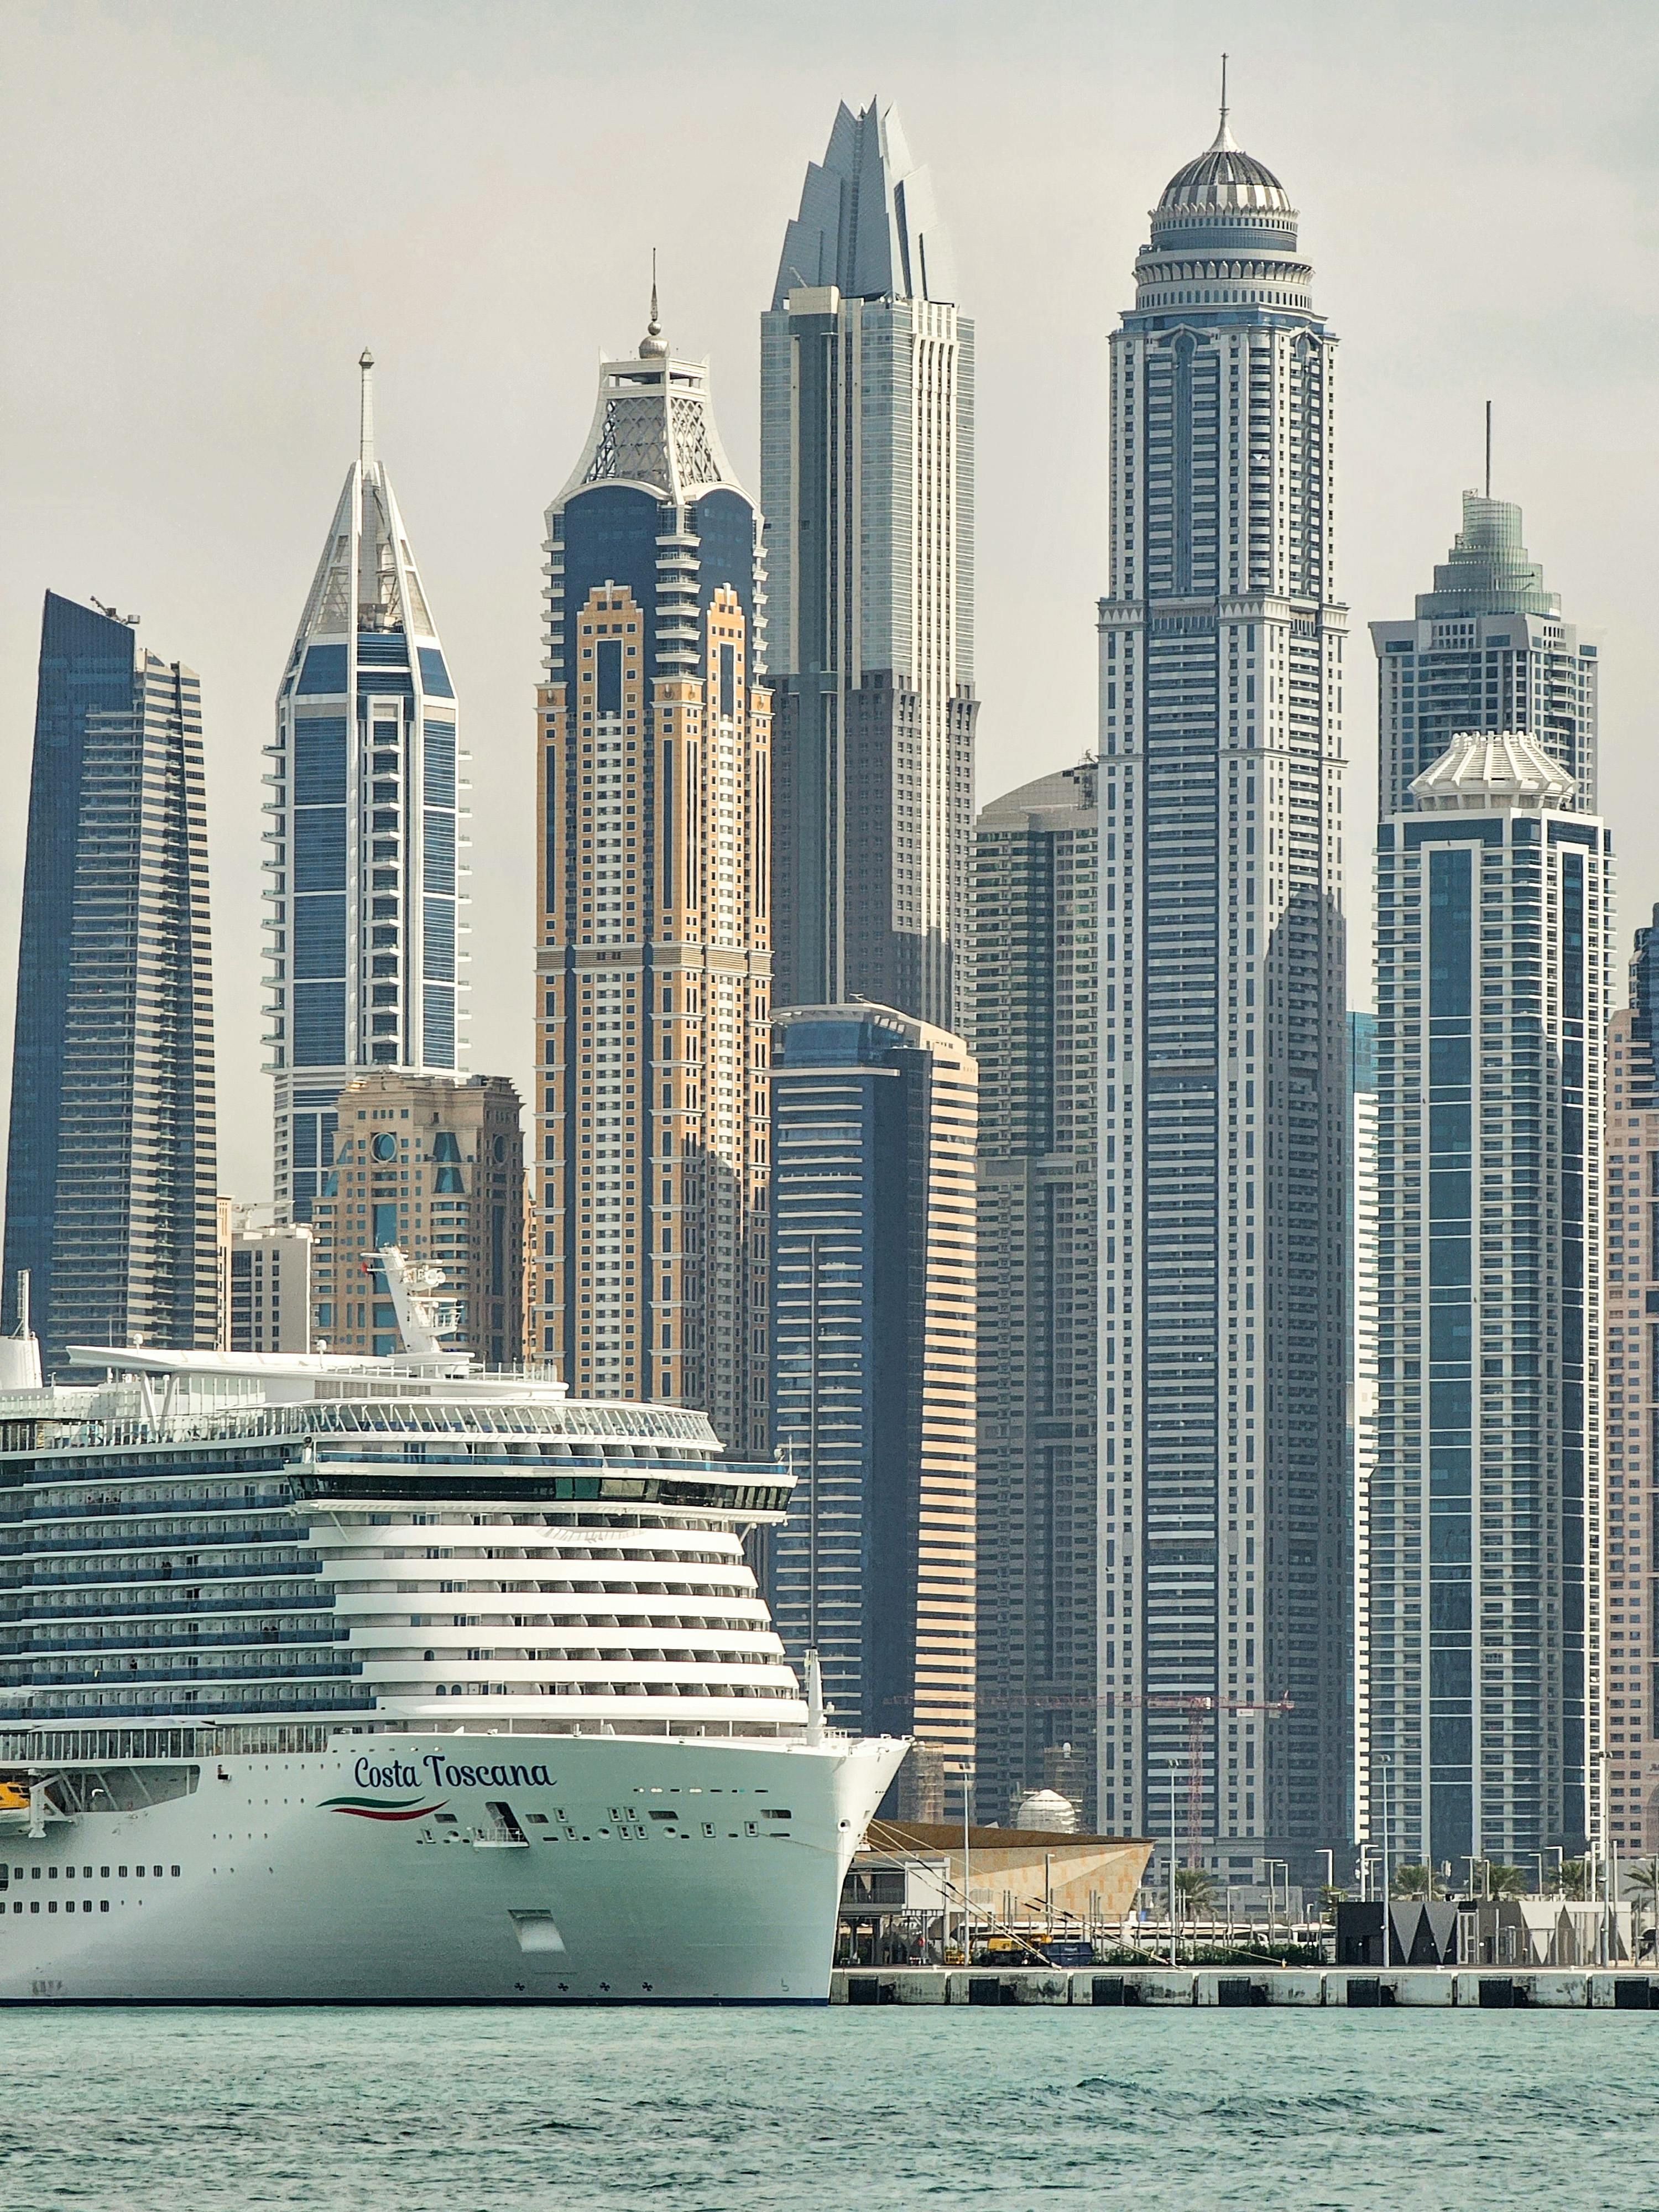 Costa Toscana in Dubai's Marina, United Arab Emirates